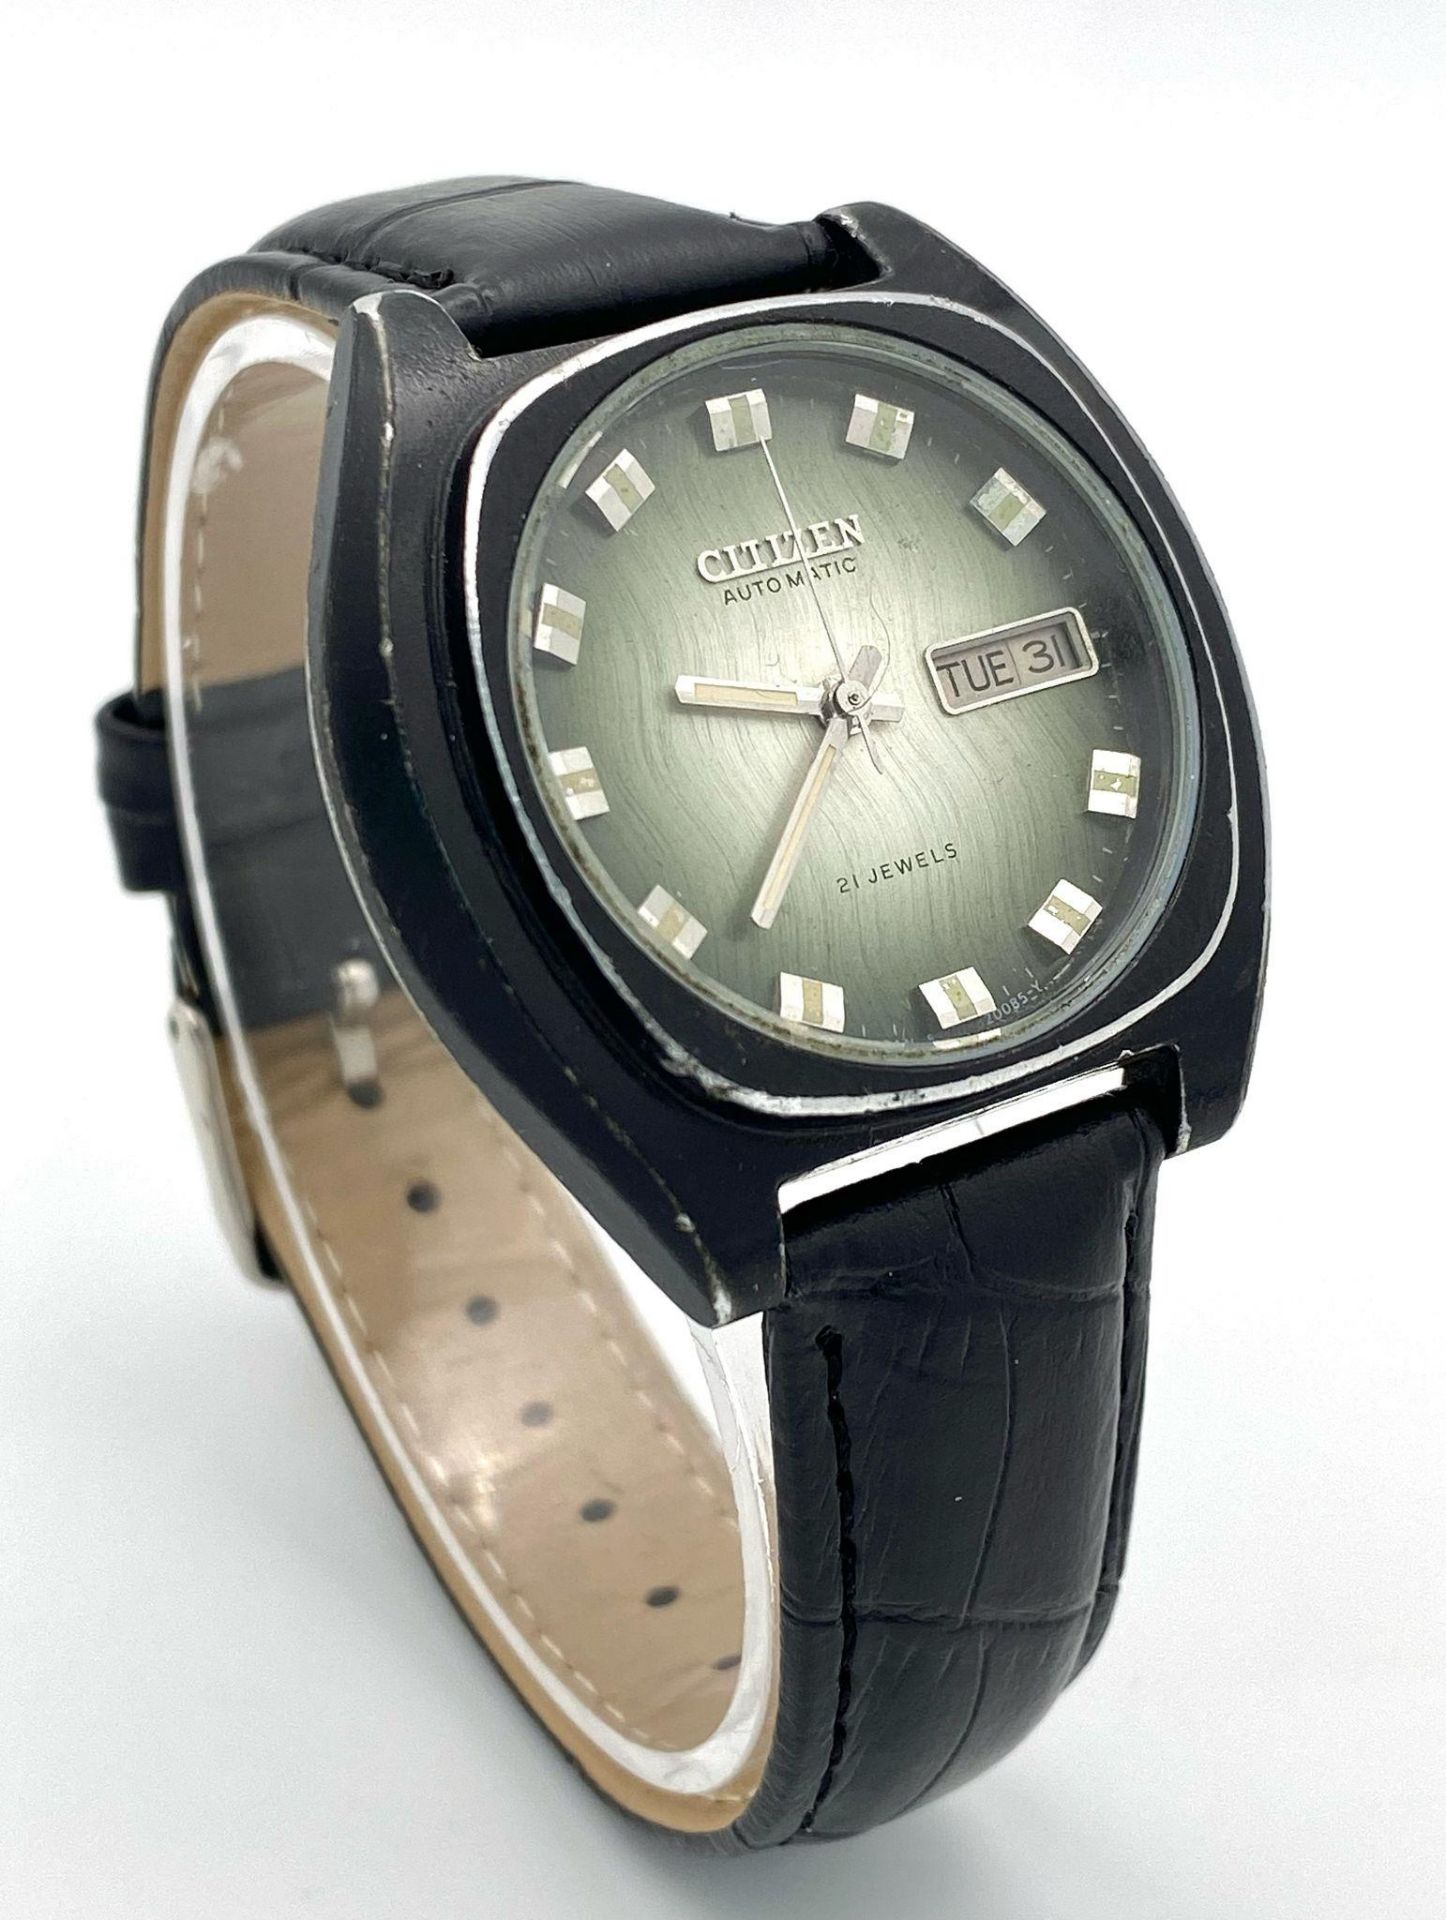 A Vintage Citizen 21 Jewels Automatic Gents Watch. Black leather strap. Black stainless steel case - - Bild 3 aus 7